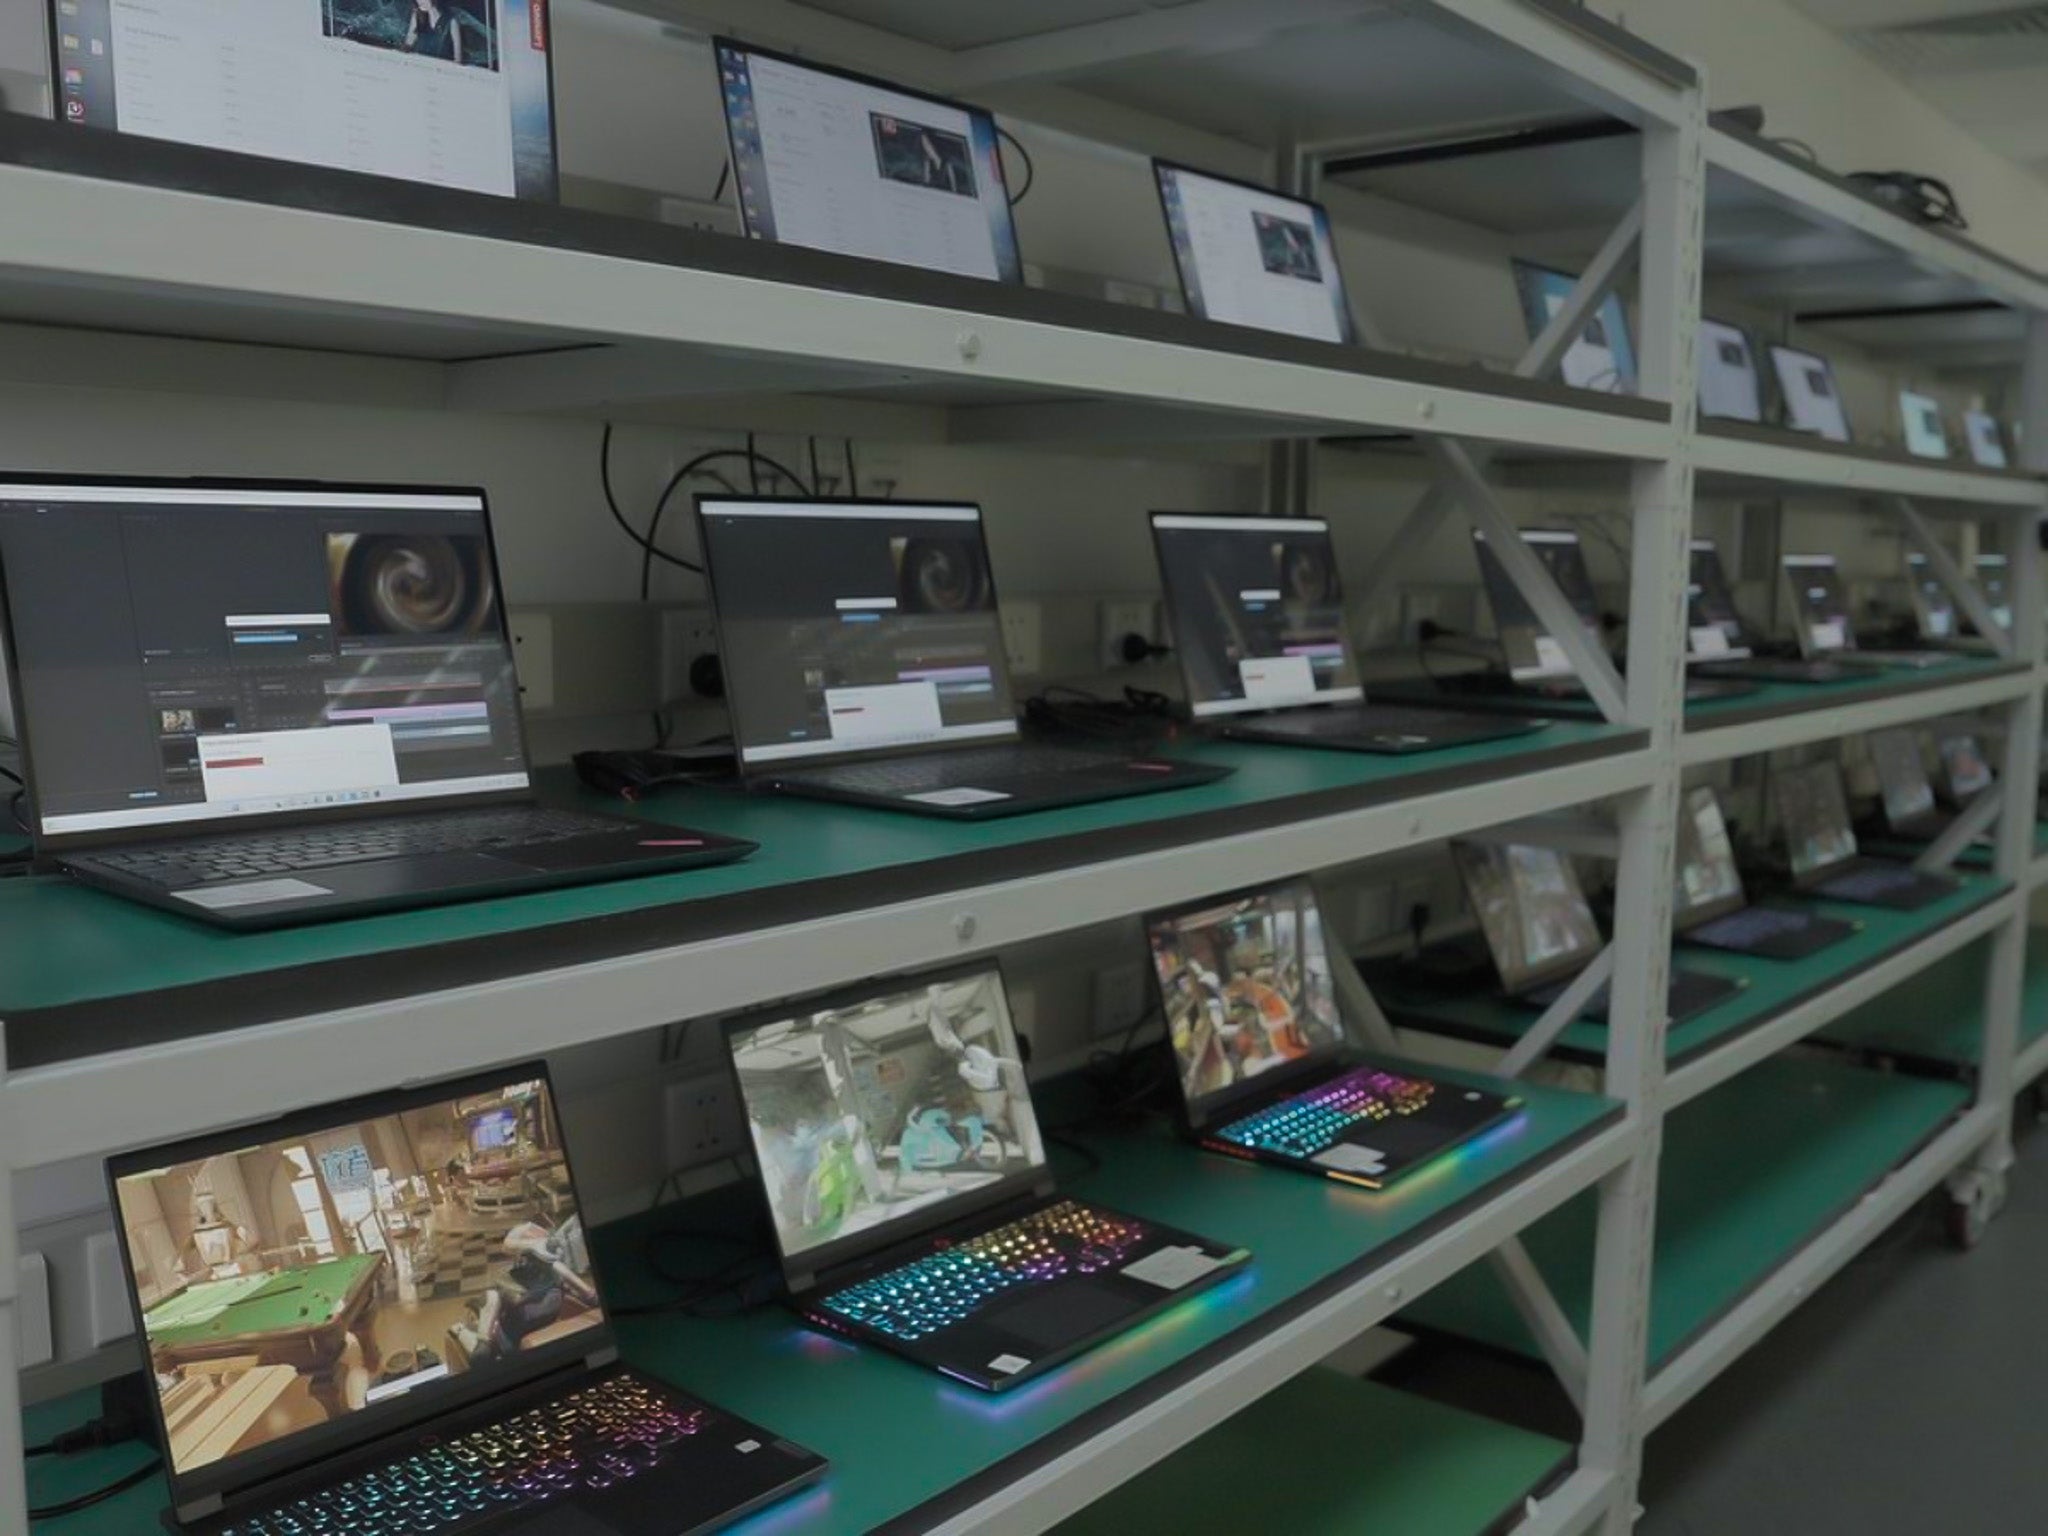 Many laptops sitting on a shelf during testing